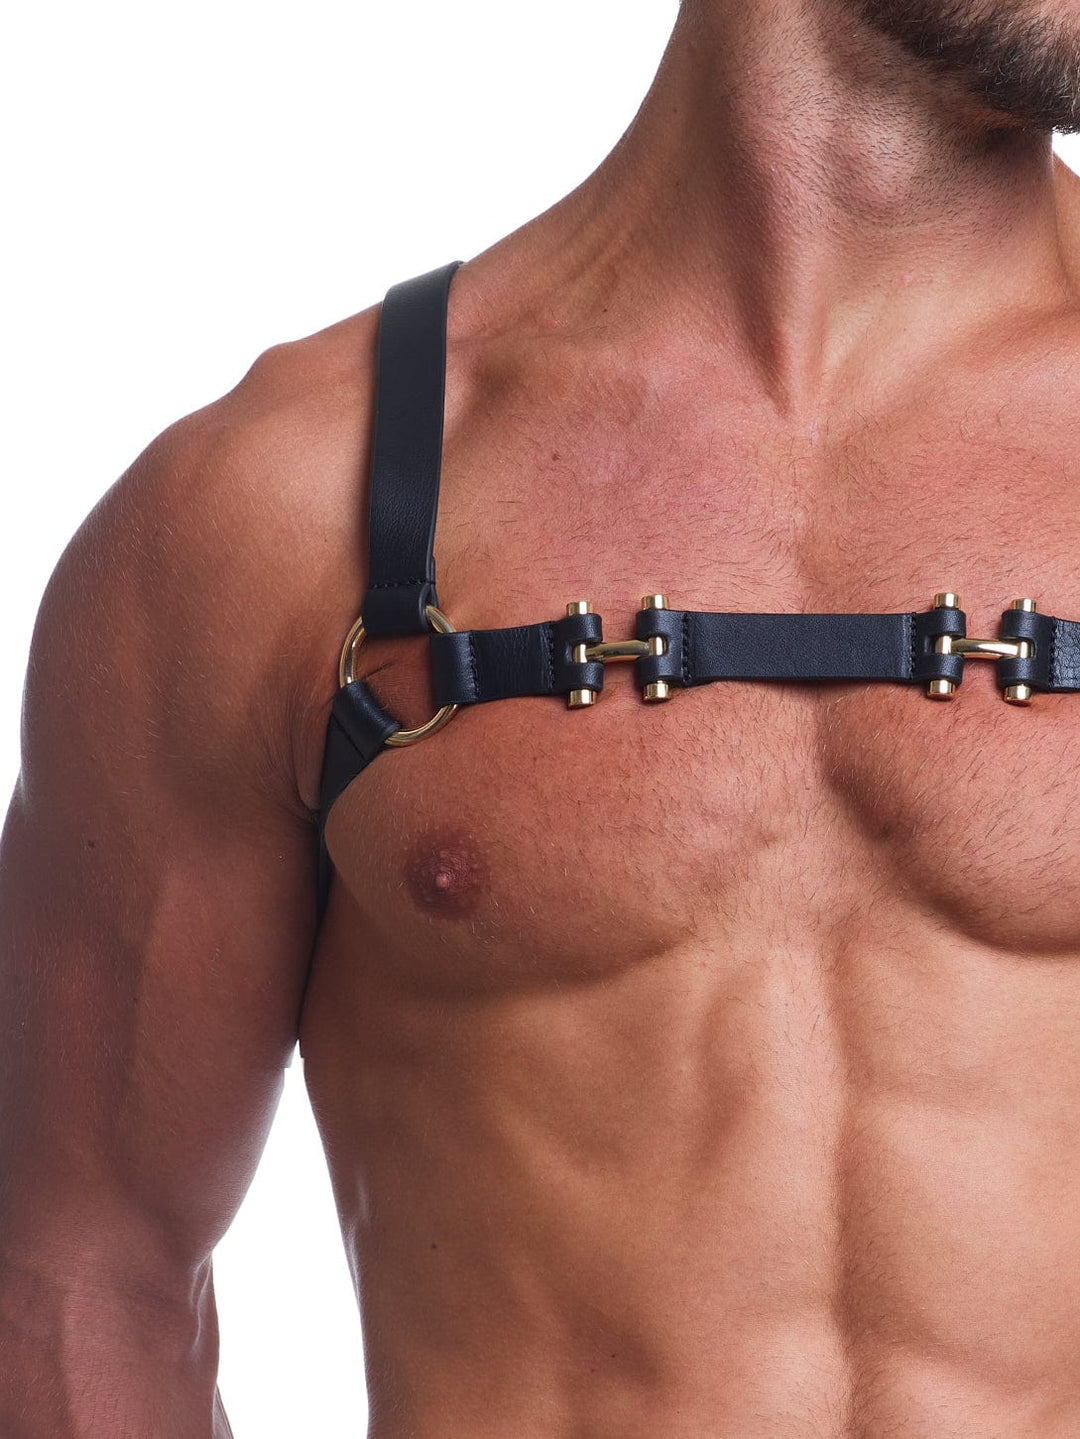 Mens X-Shape Underwear Muscle Harness Belt Strap with Low Rise